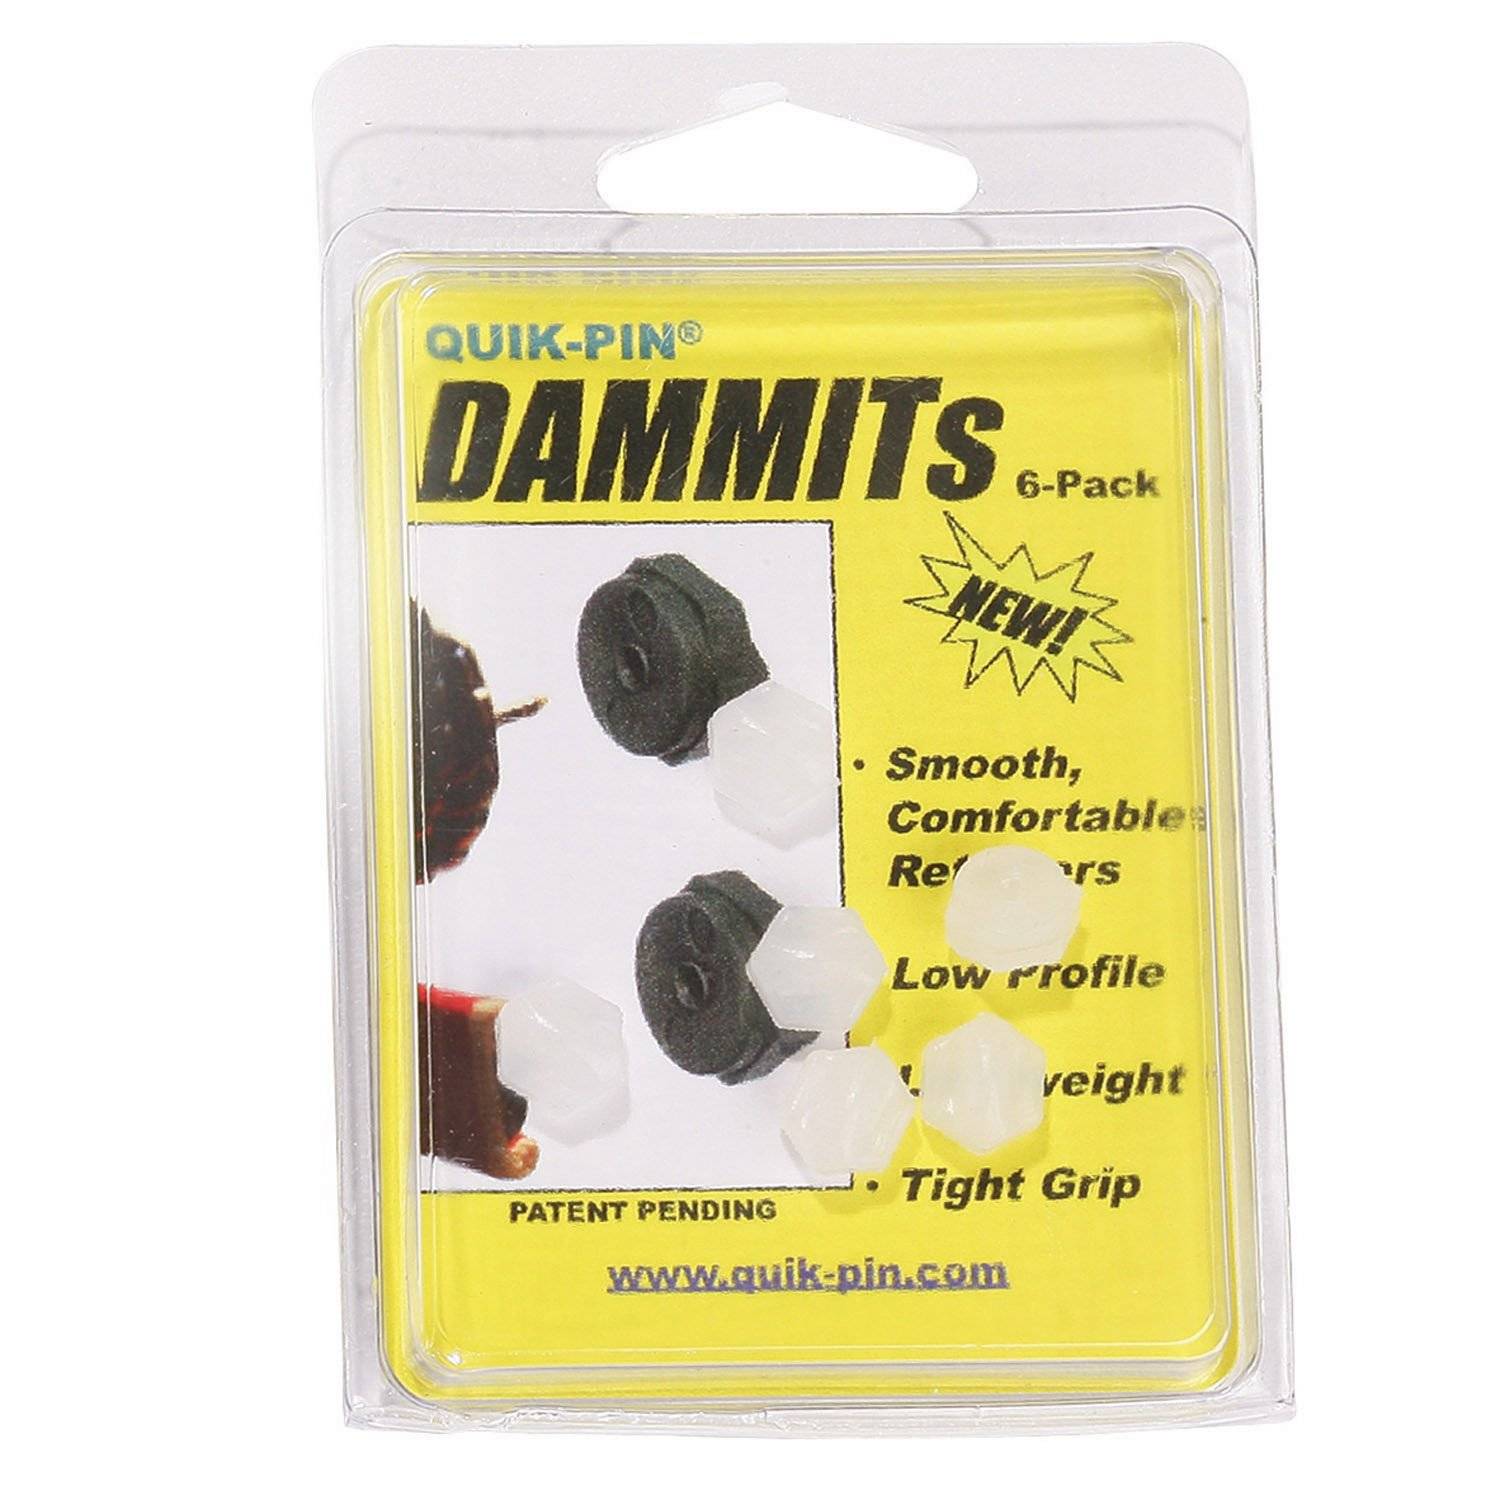 Quik-Pin DAMMITs (6 Pack)